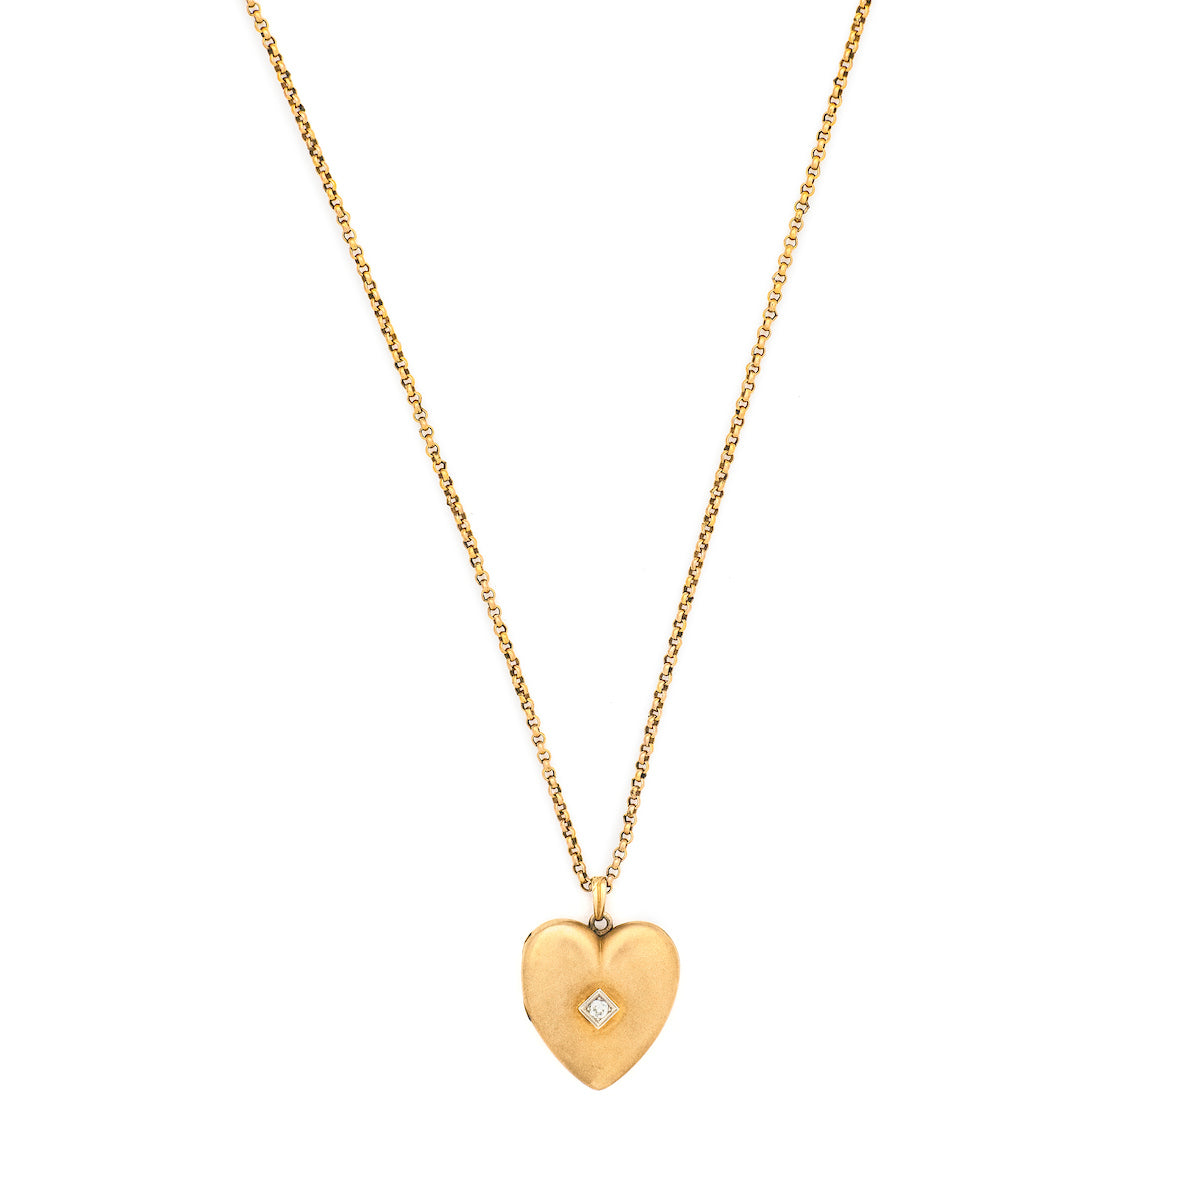 Antique Gold Heart Locket in 14K